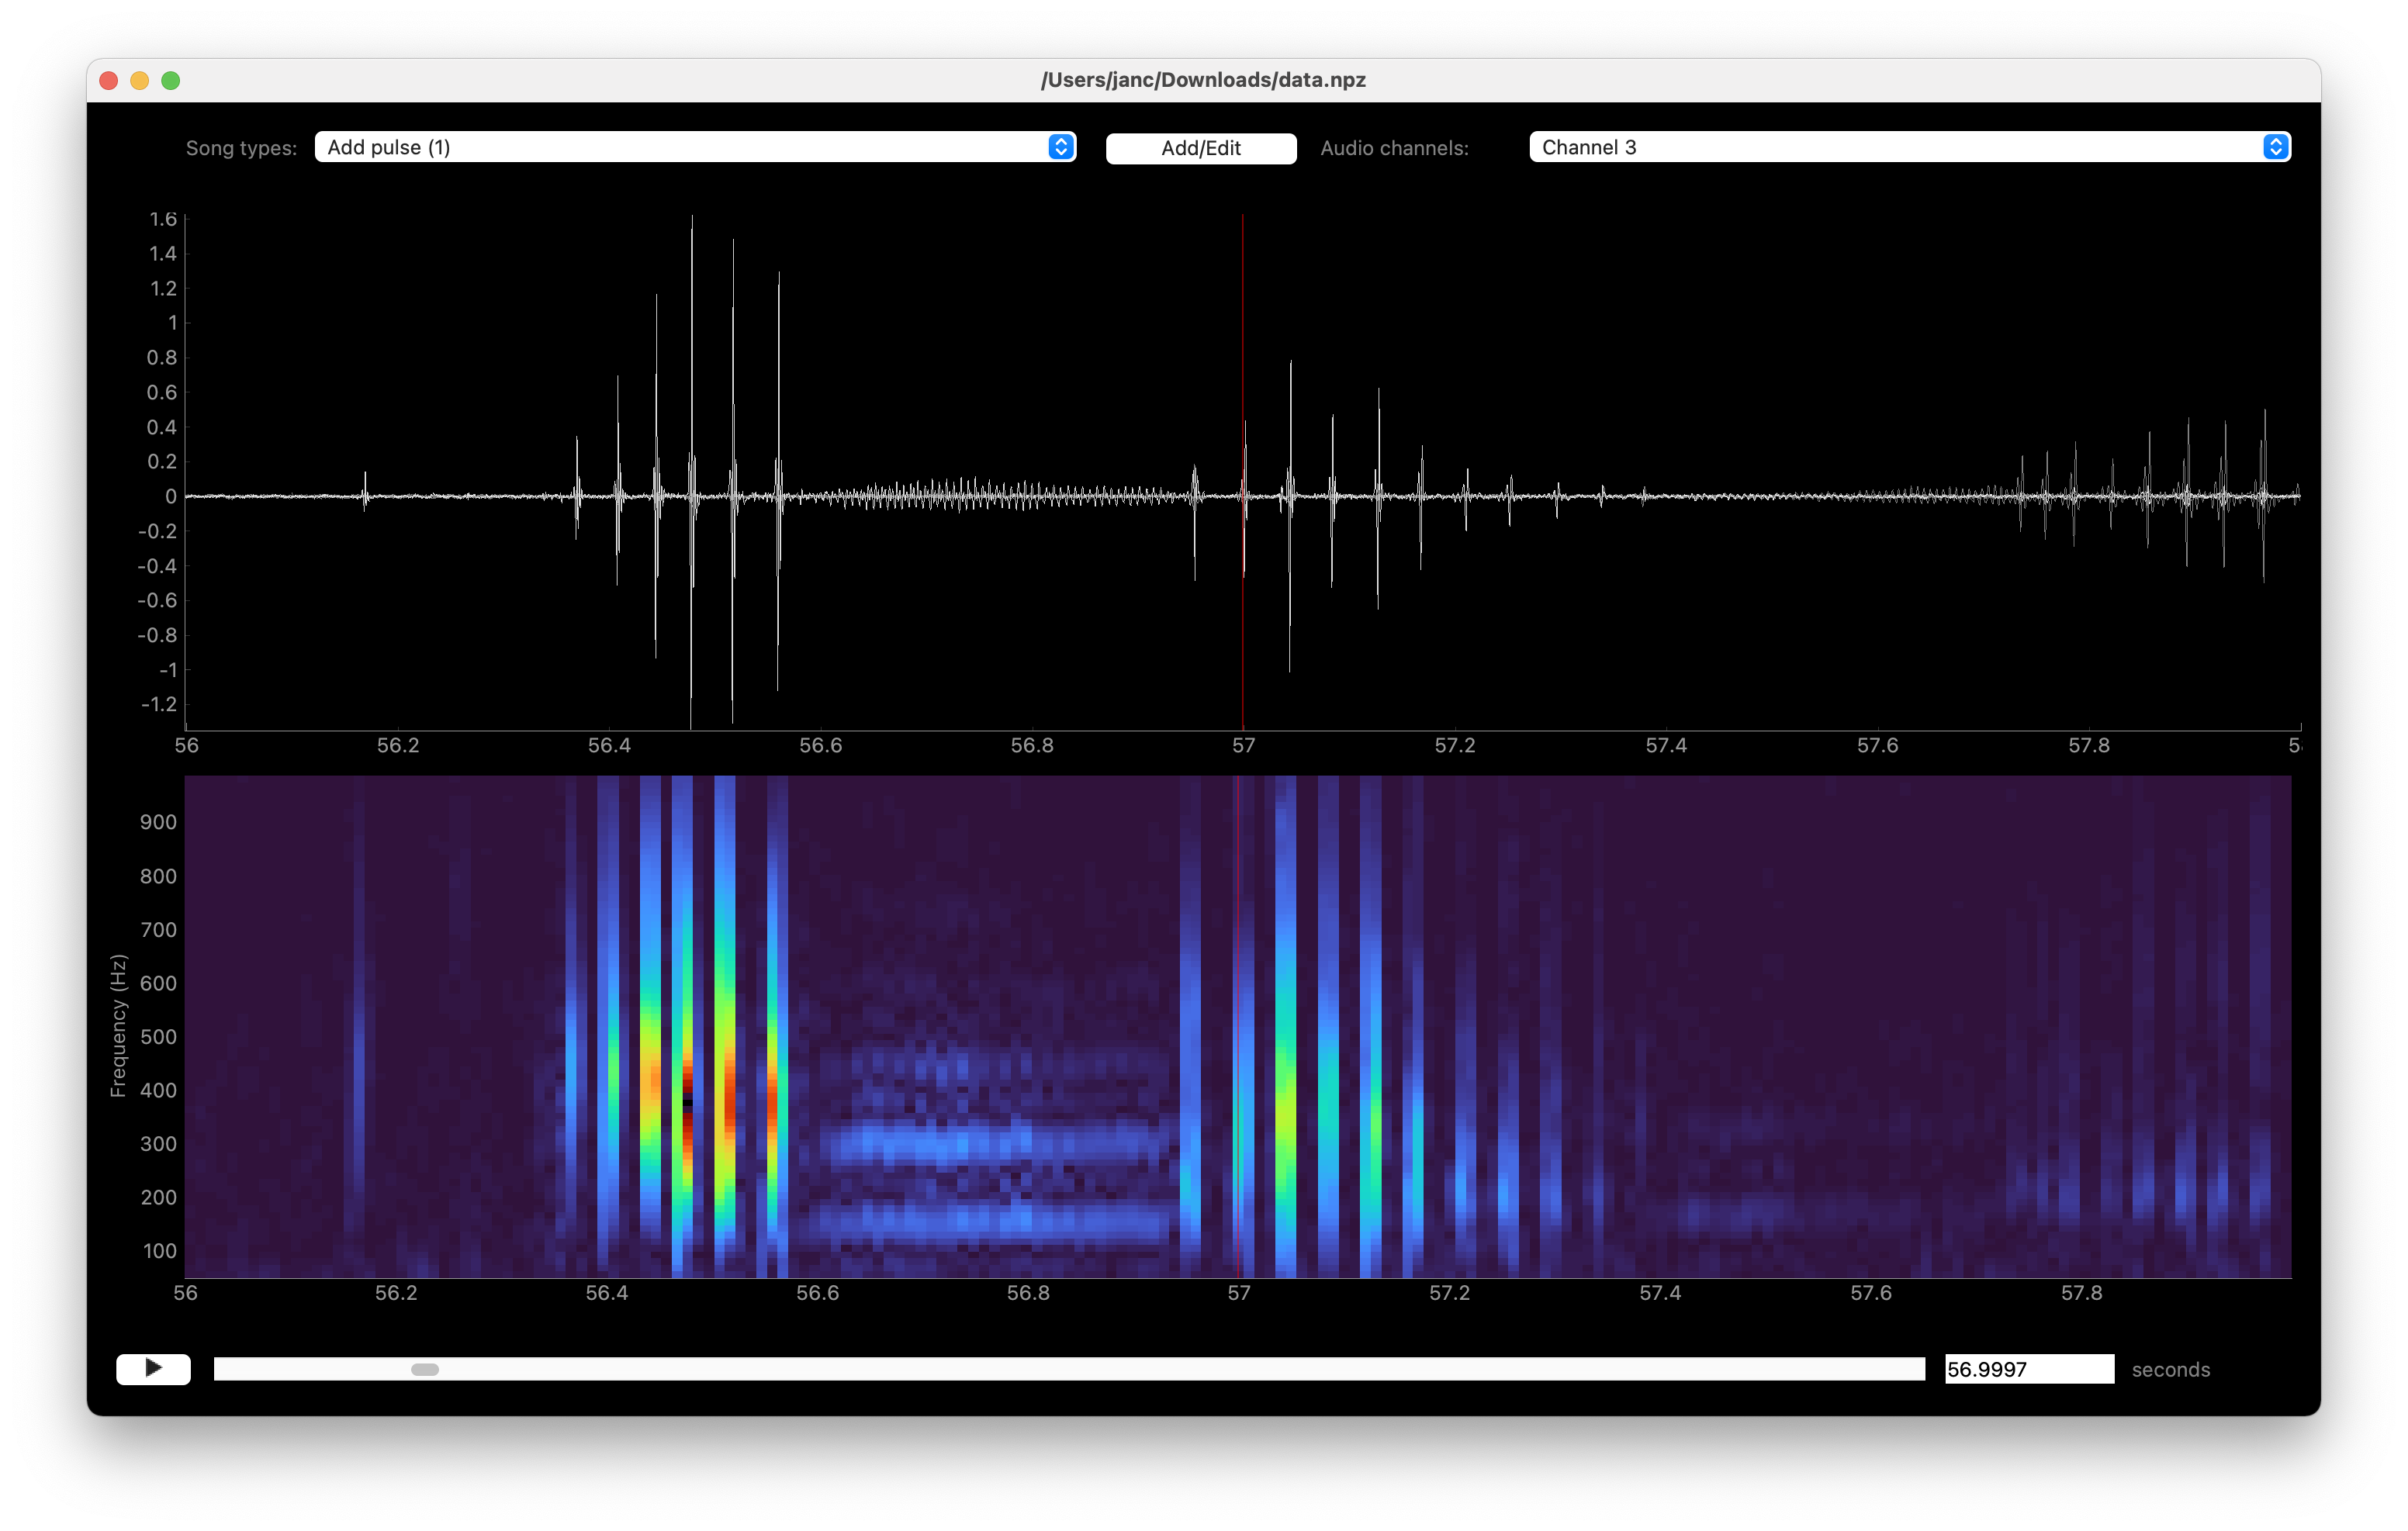 waveform and spectrogram display